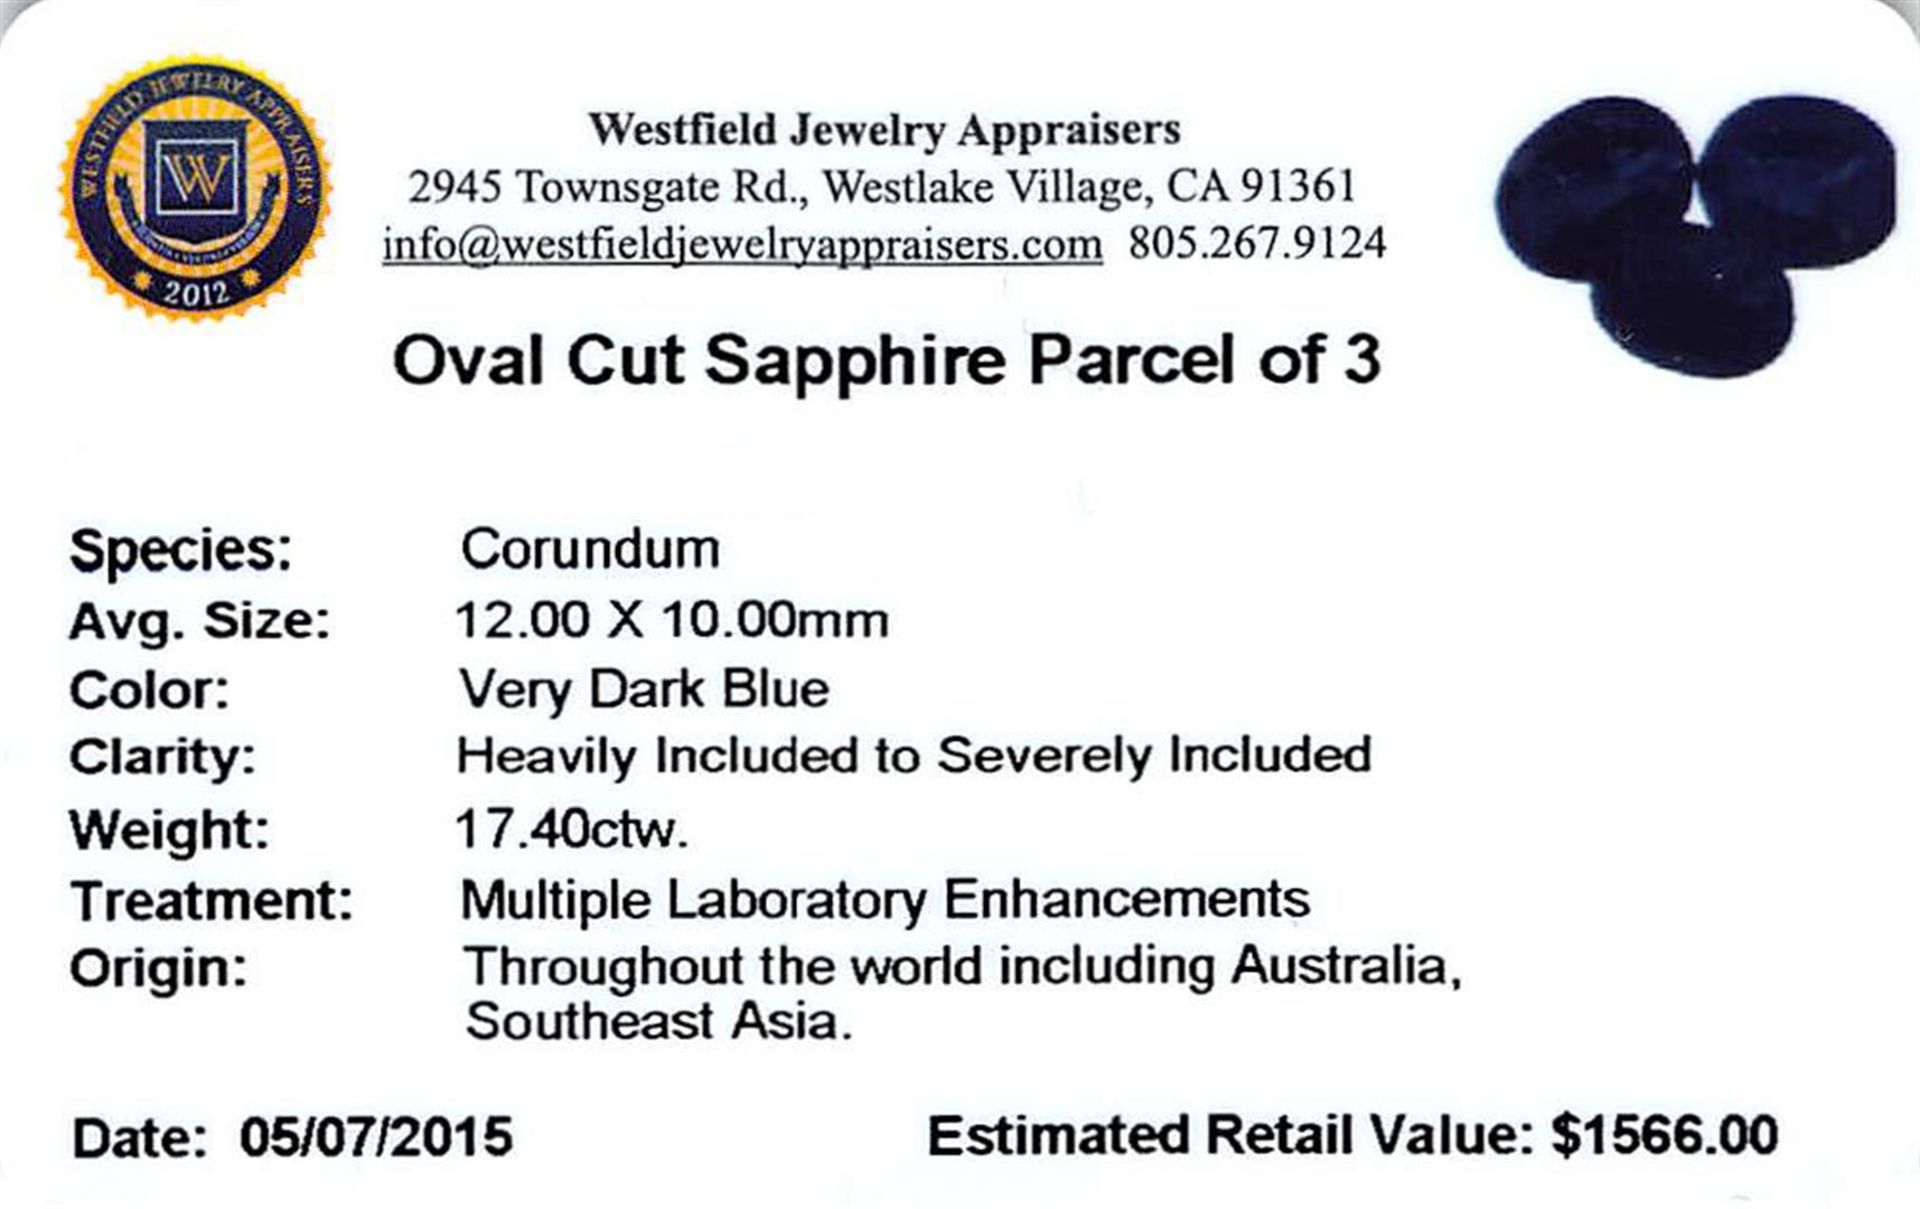 17.4ctw Oval Cut Sapphire Parcel - Image 2 of 2